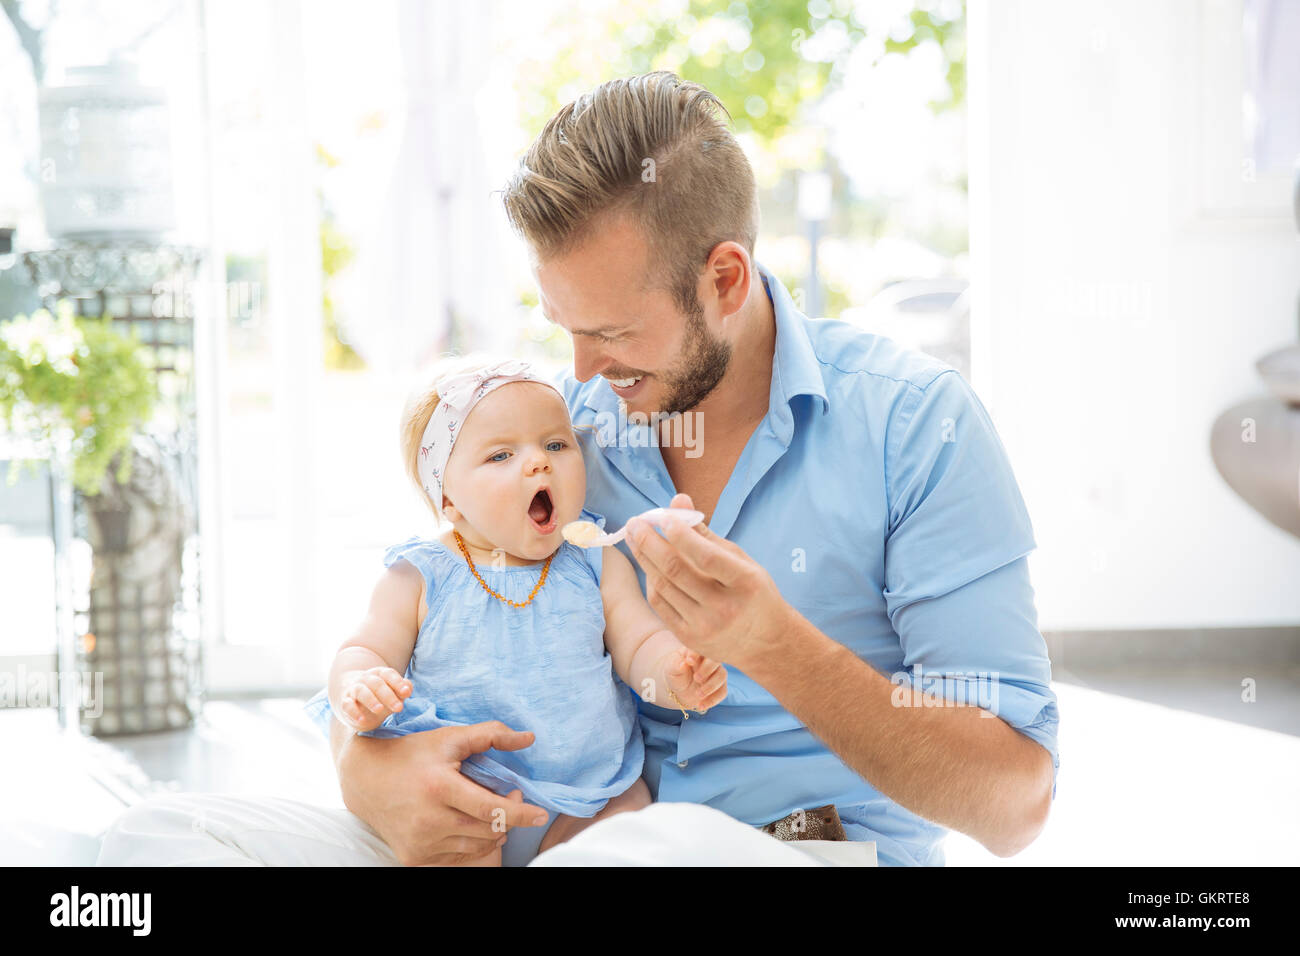 Dad feeding his baby girl Stock Photo